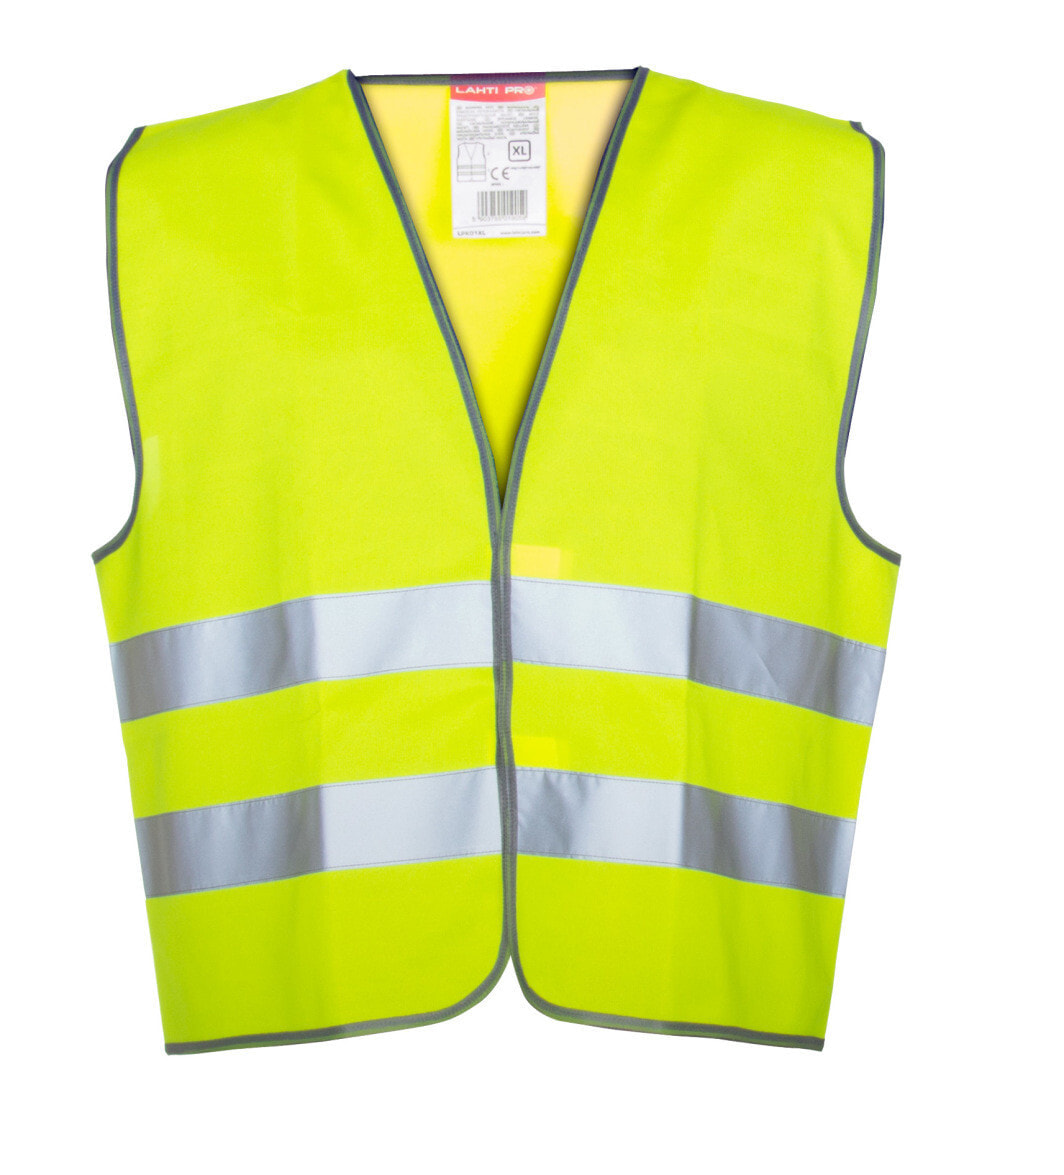 Lahti Pro Warning vest, yellow. M - LPKO1M